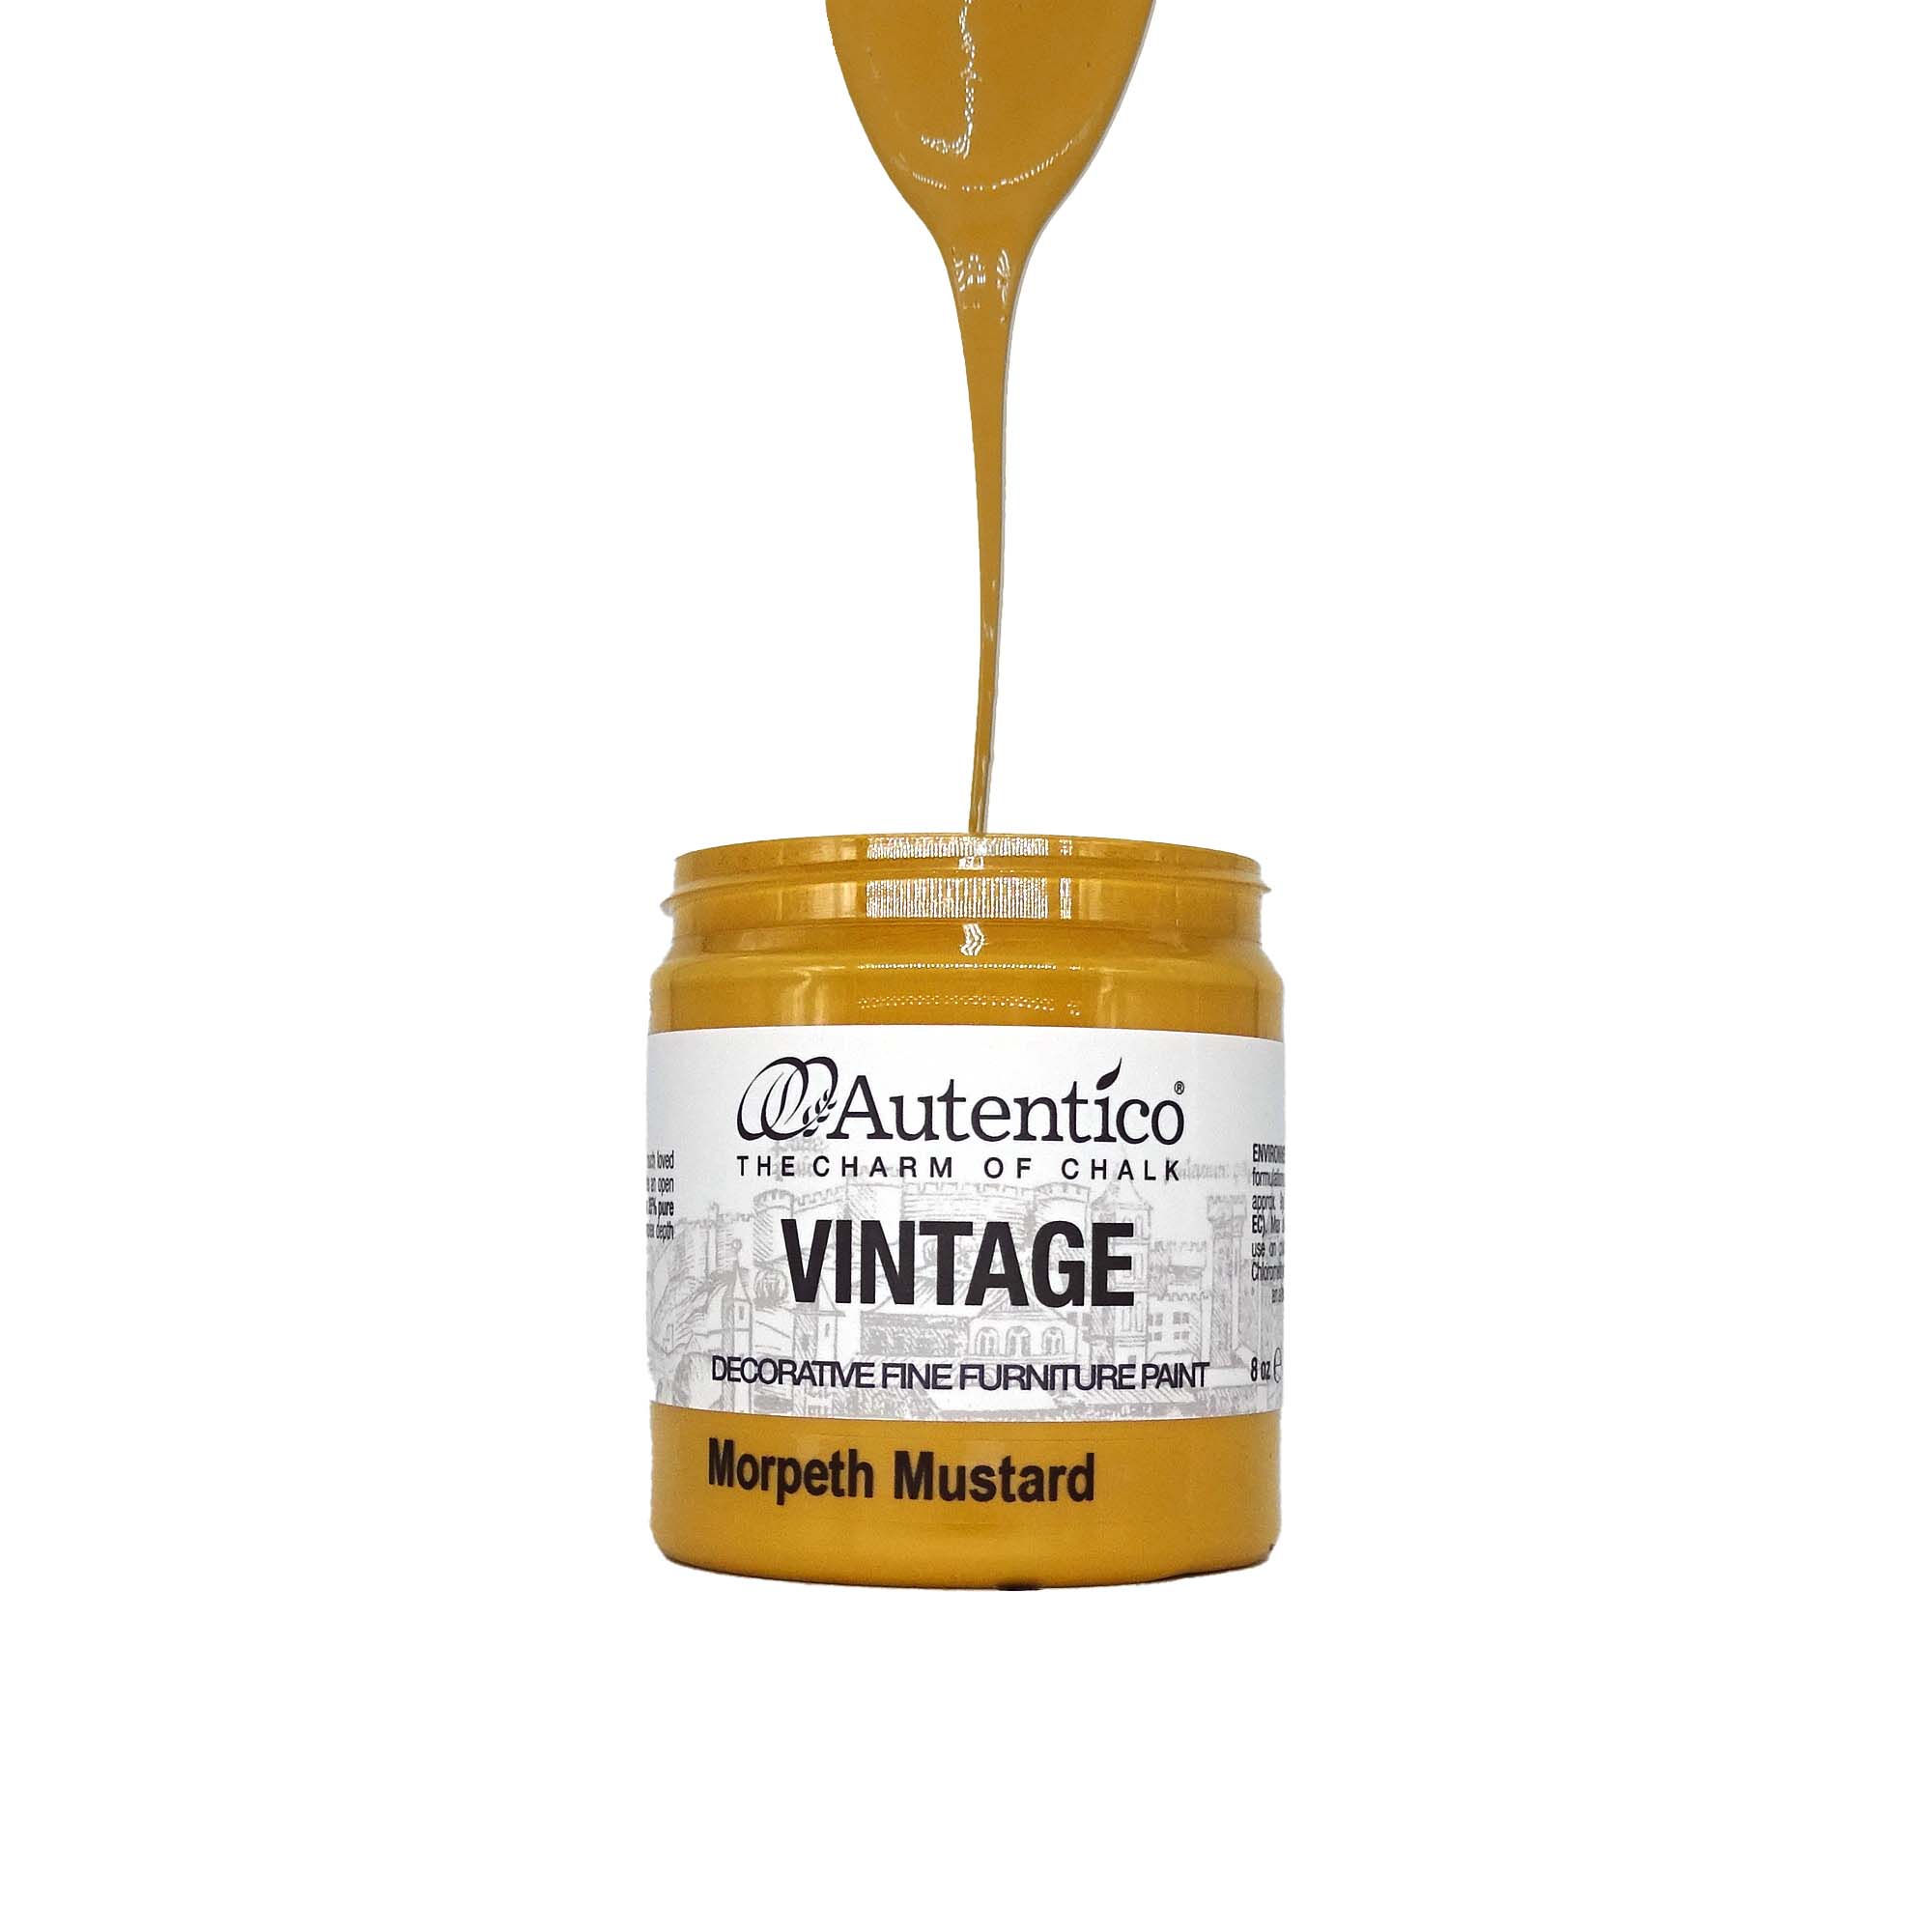 Vintage Morpeth Mustard